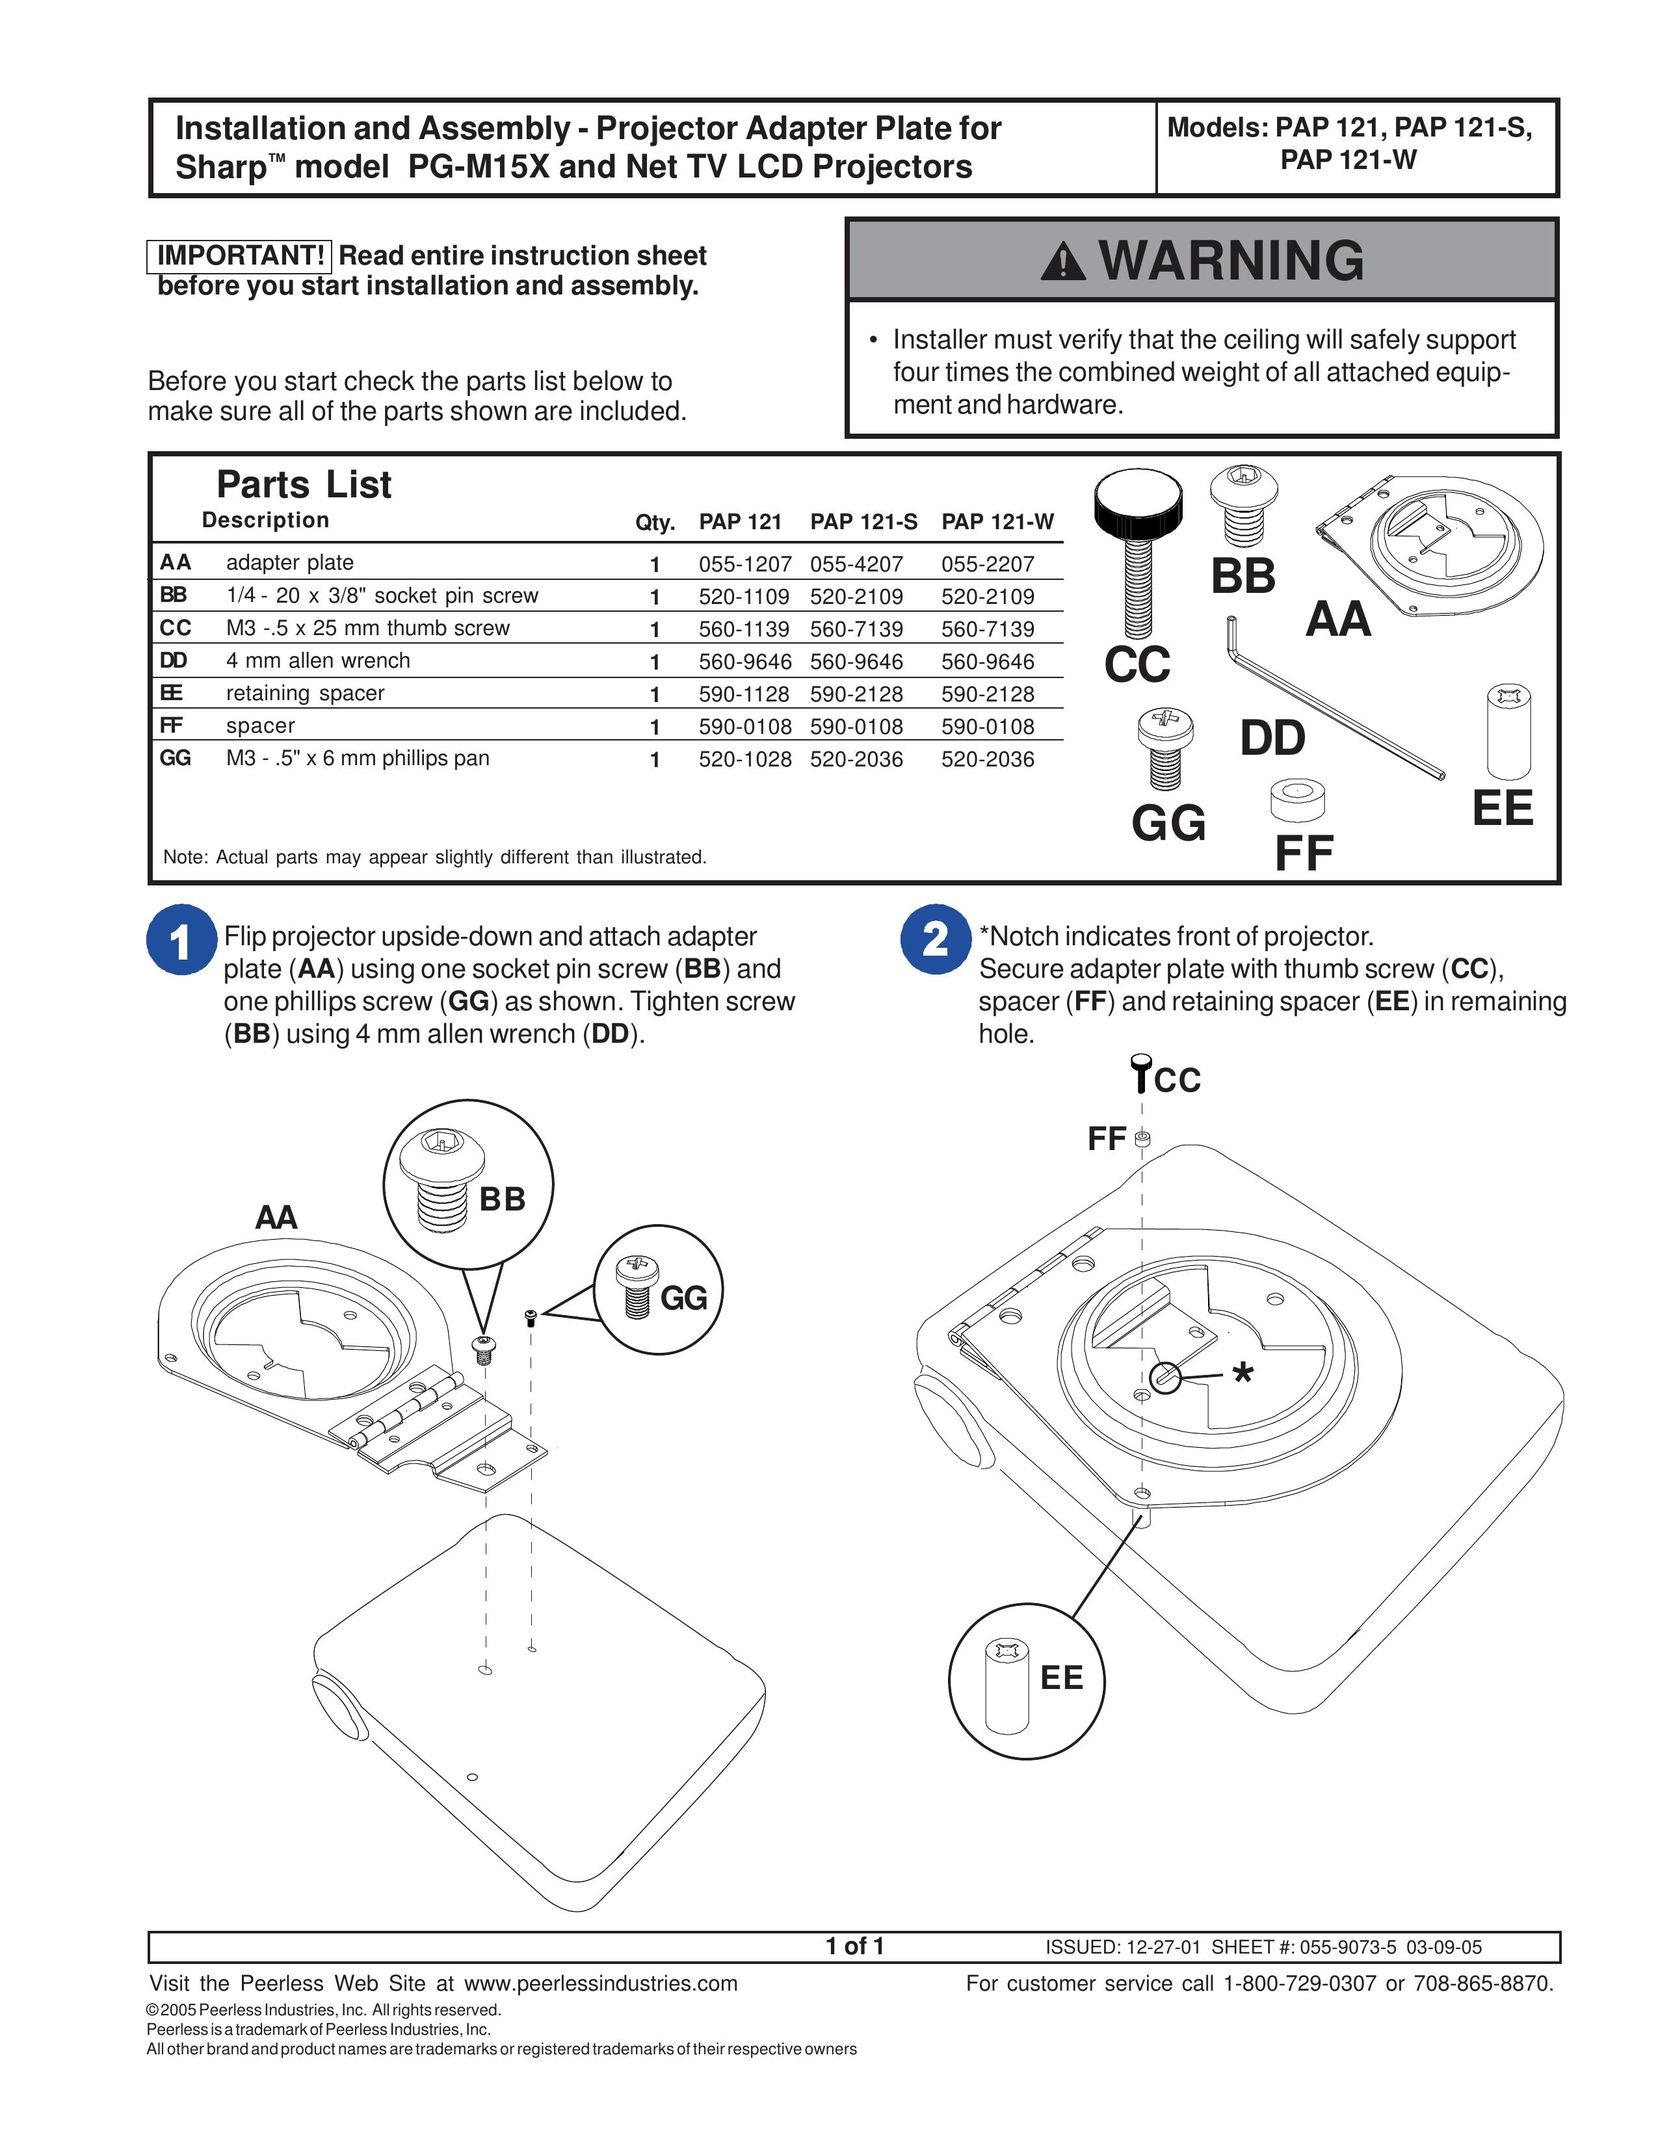 Peerless Industries PAP 121-S Projector Accessories User Manual